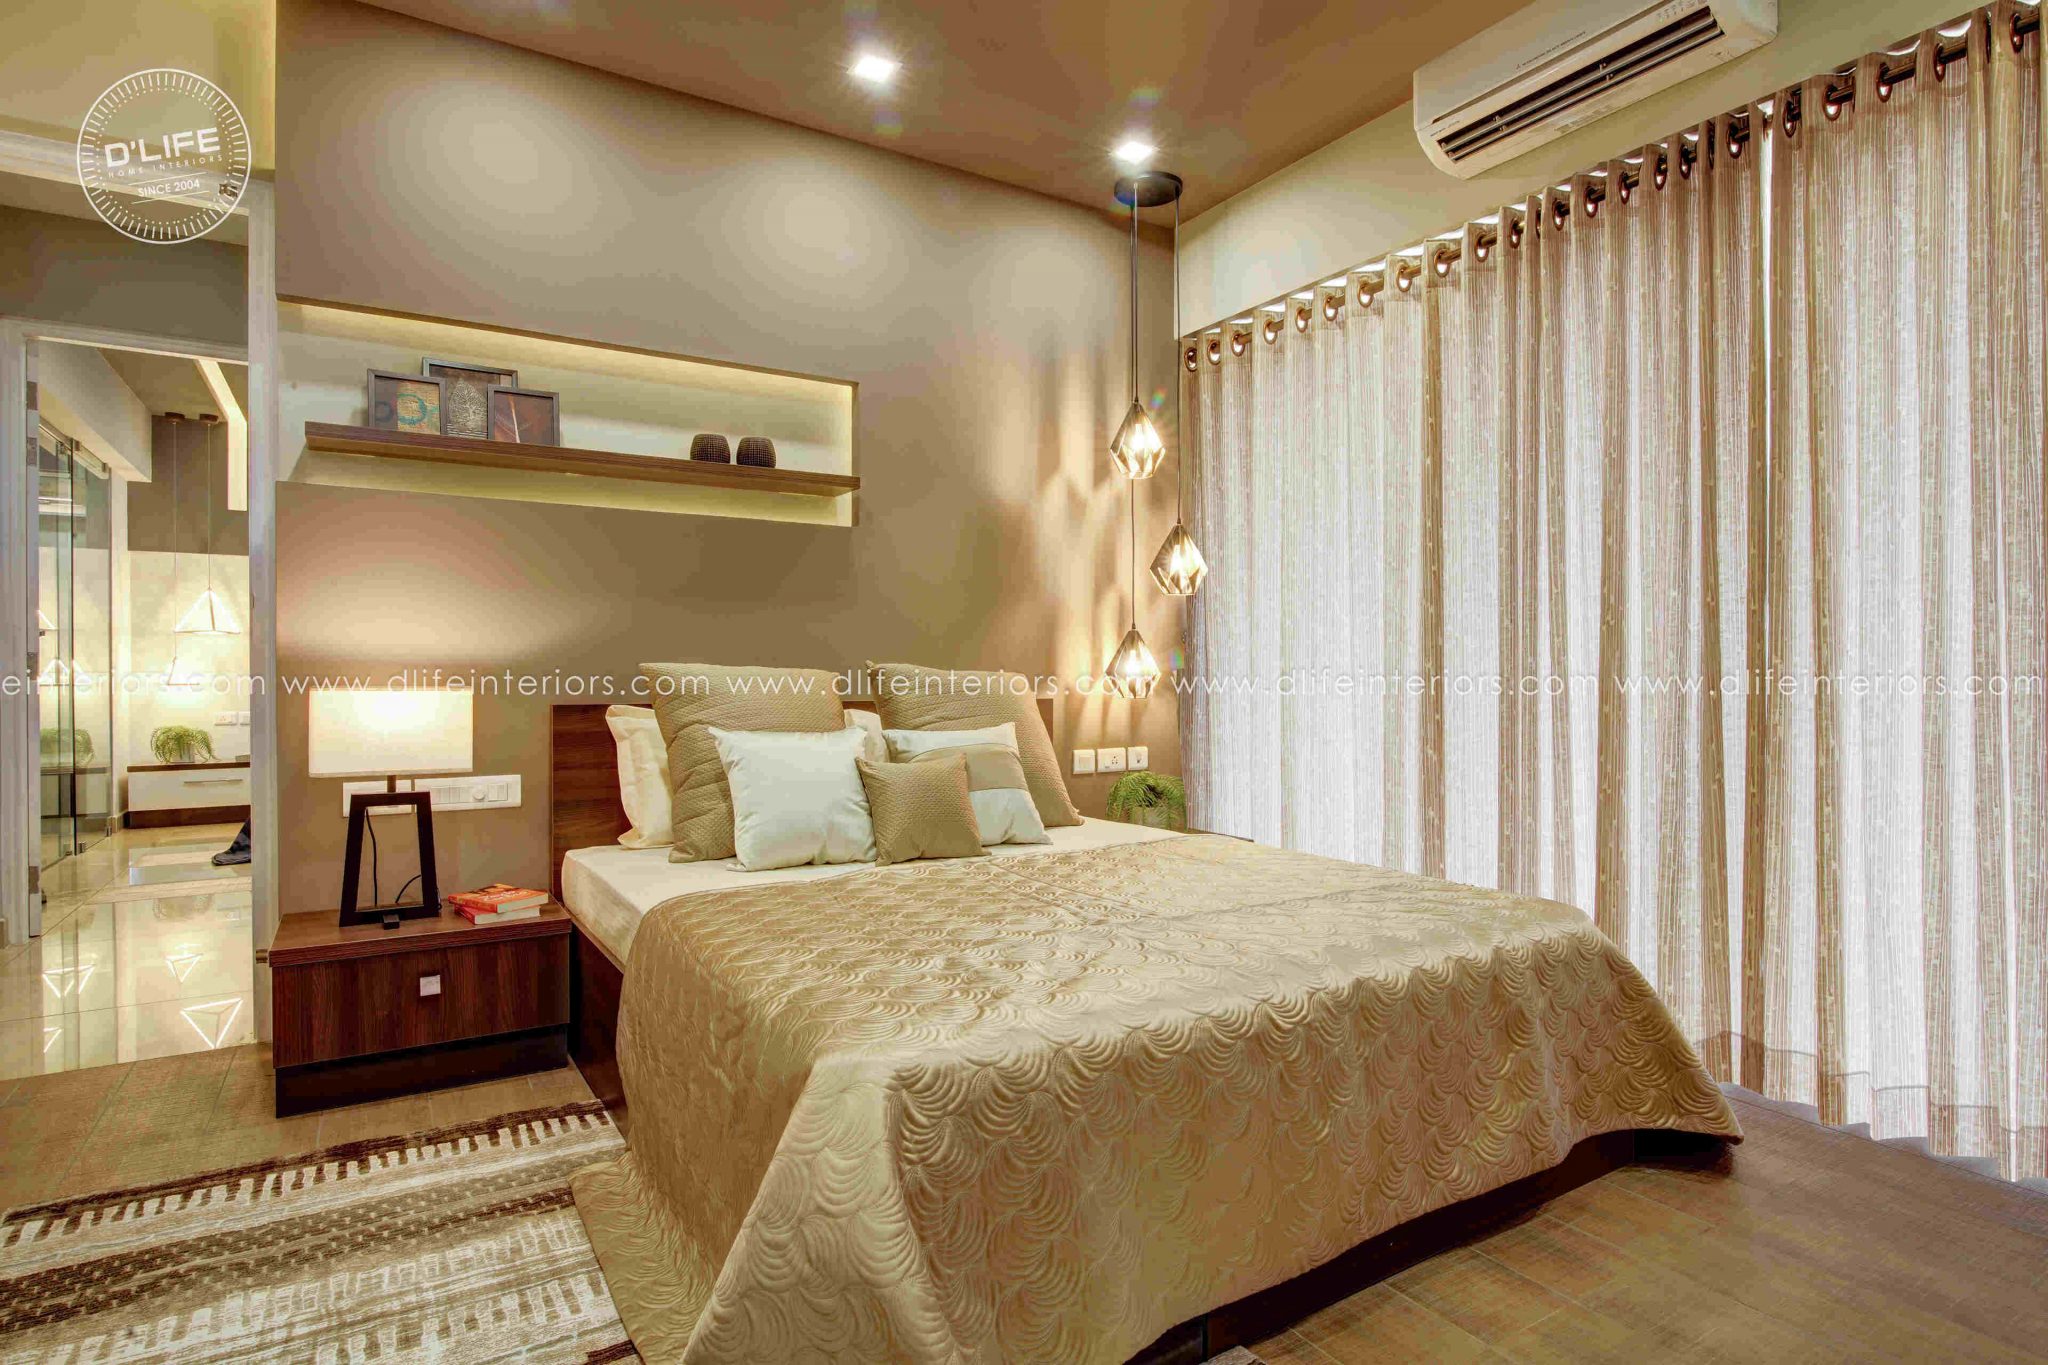 Home Interiors In Kochi For Client Mr Jai Shankar Dlife